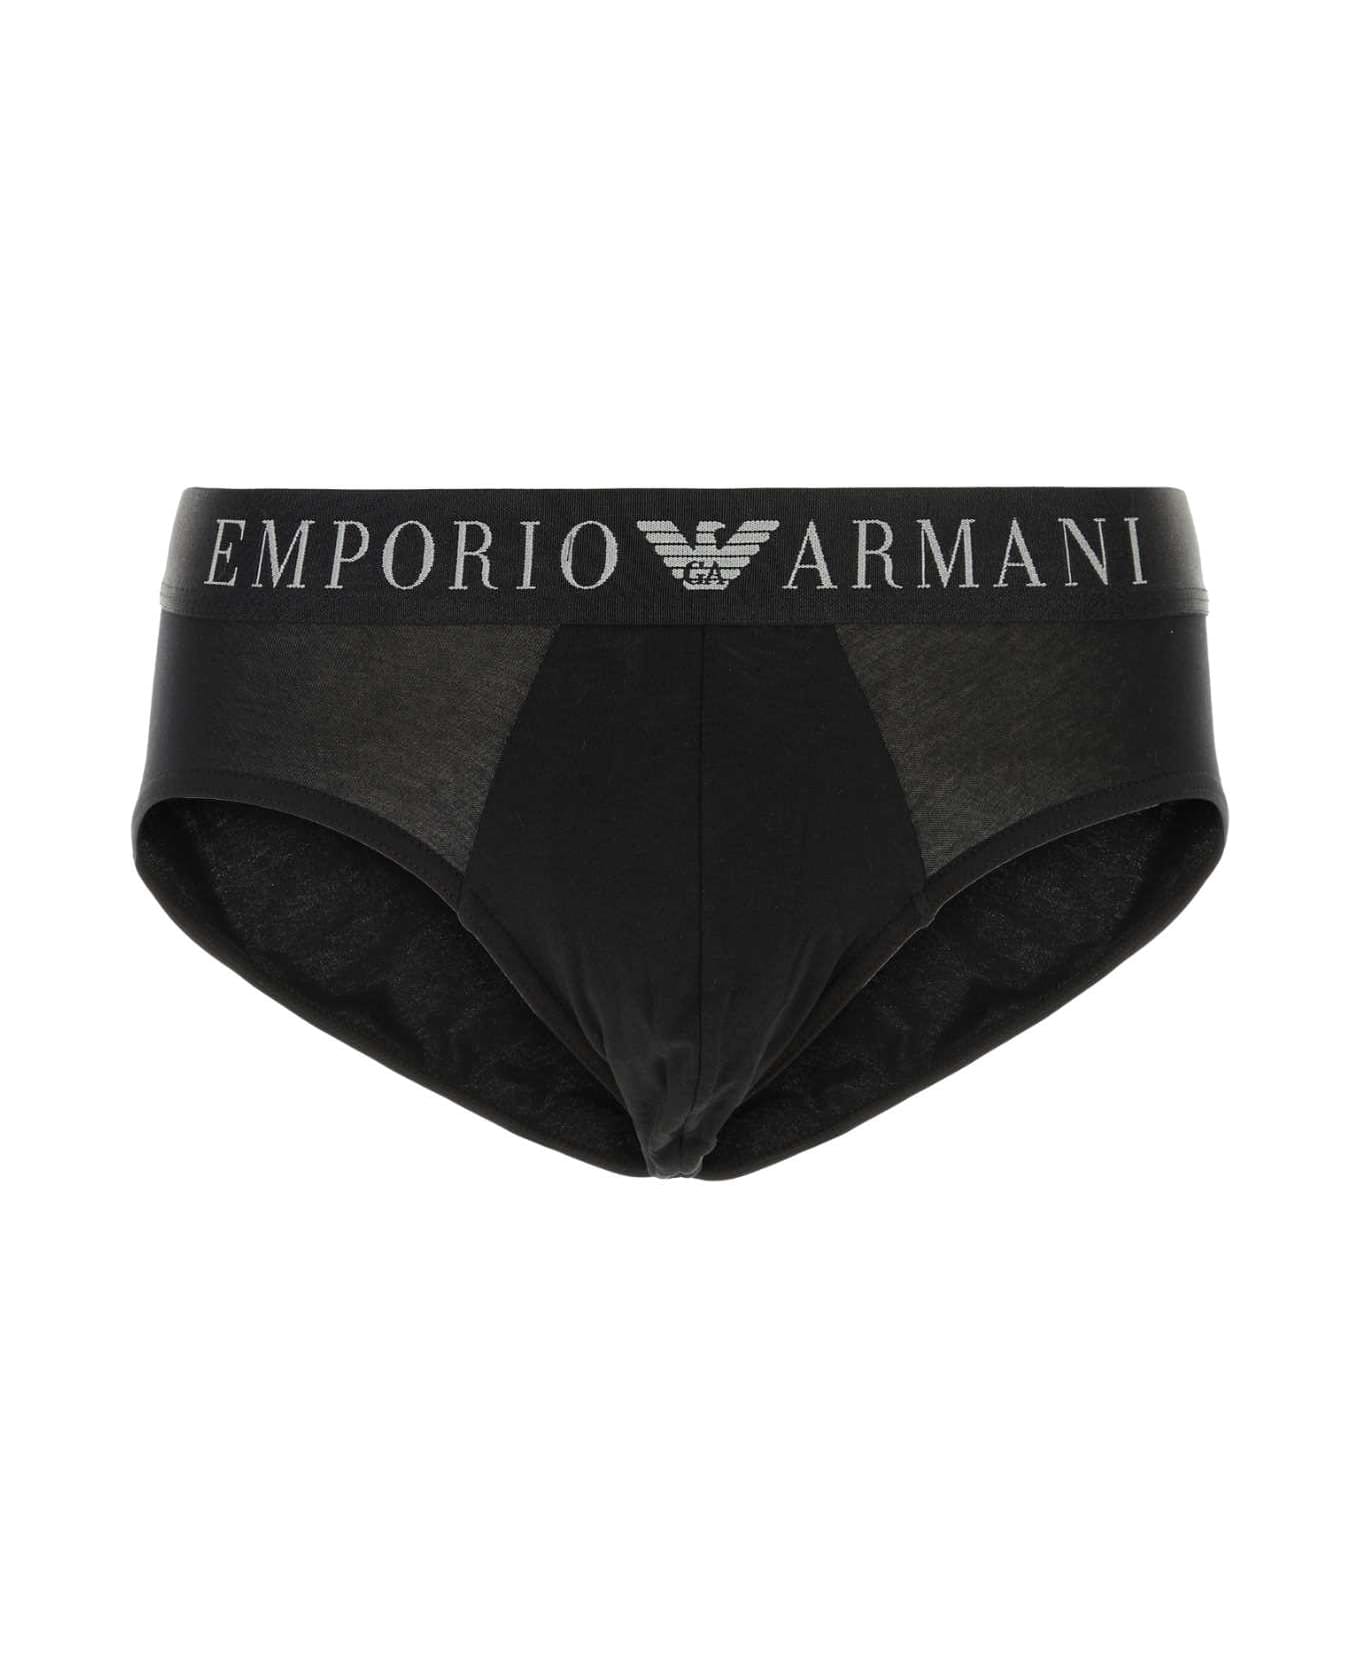 Emporio Armani Black Stretch Cotton Brief - 00020 アンダーウェア